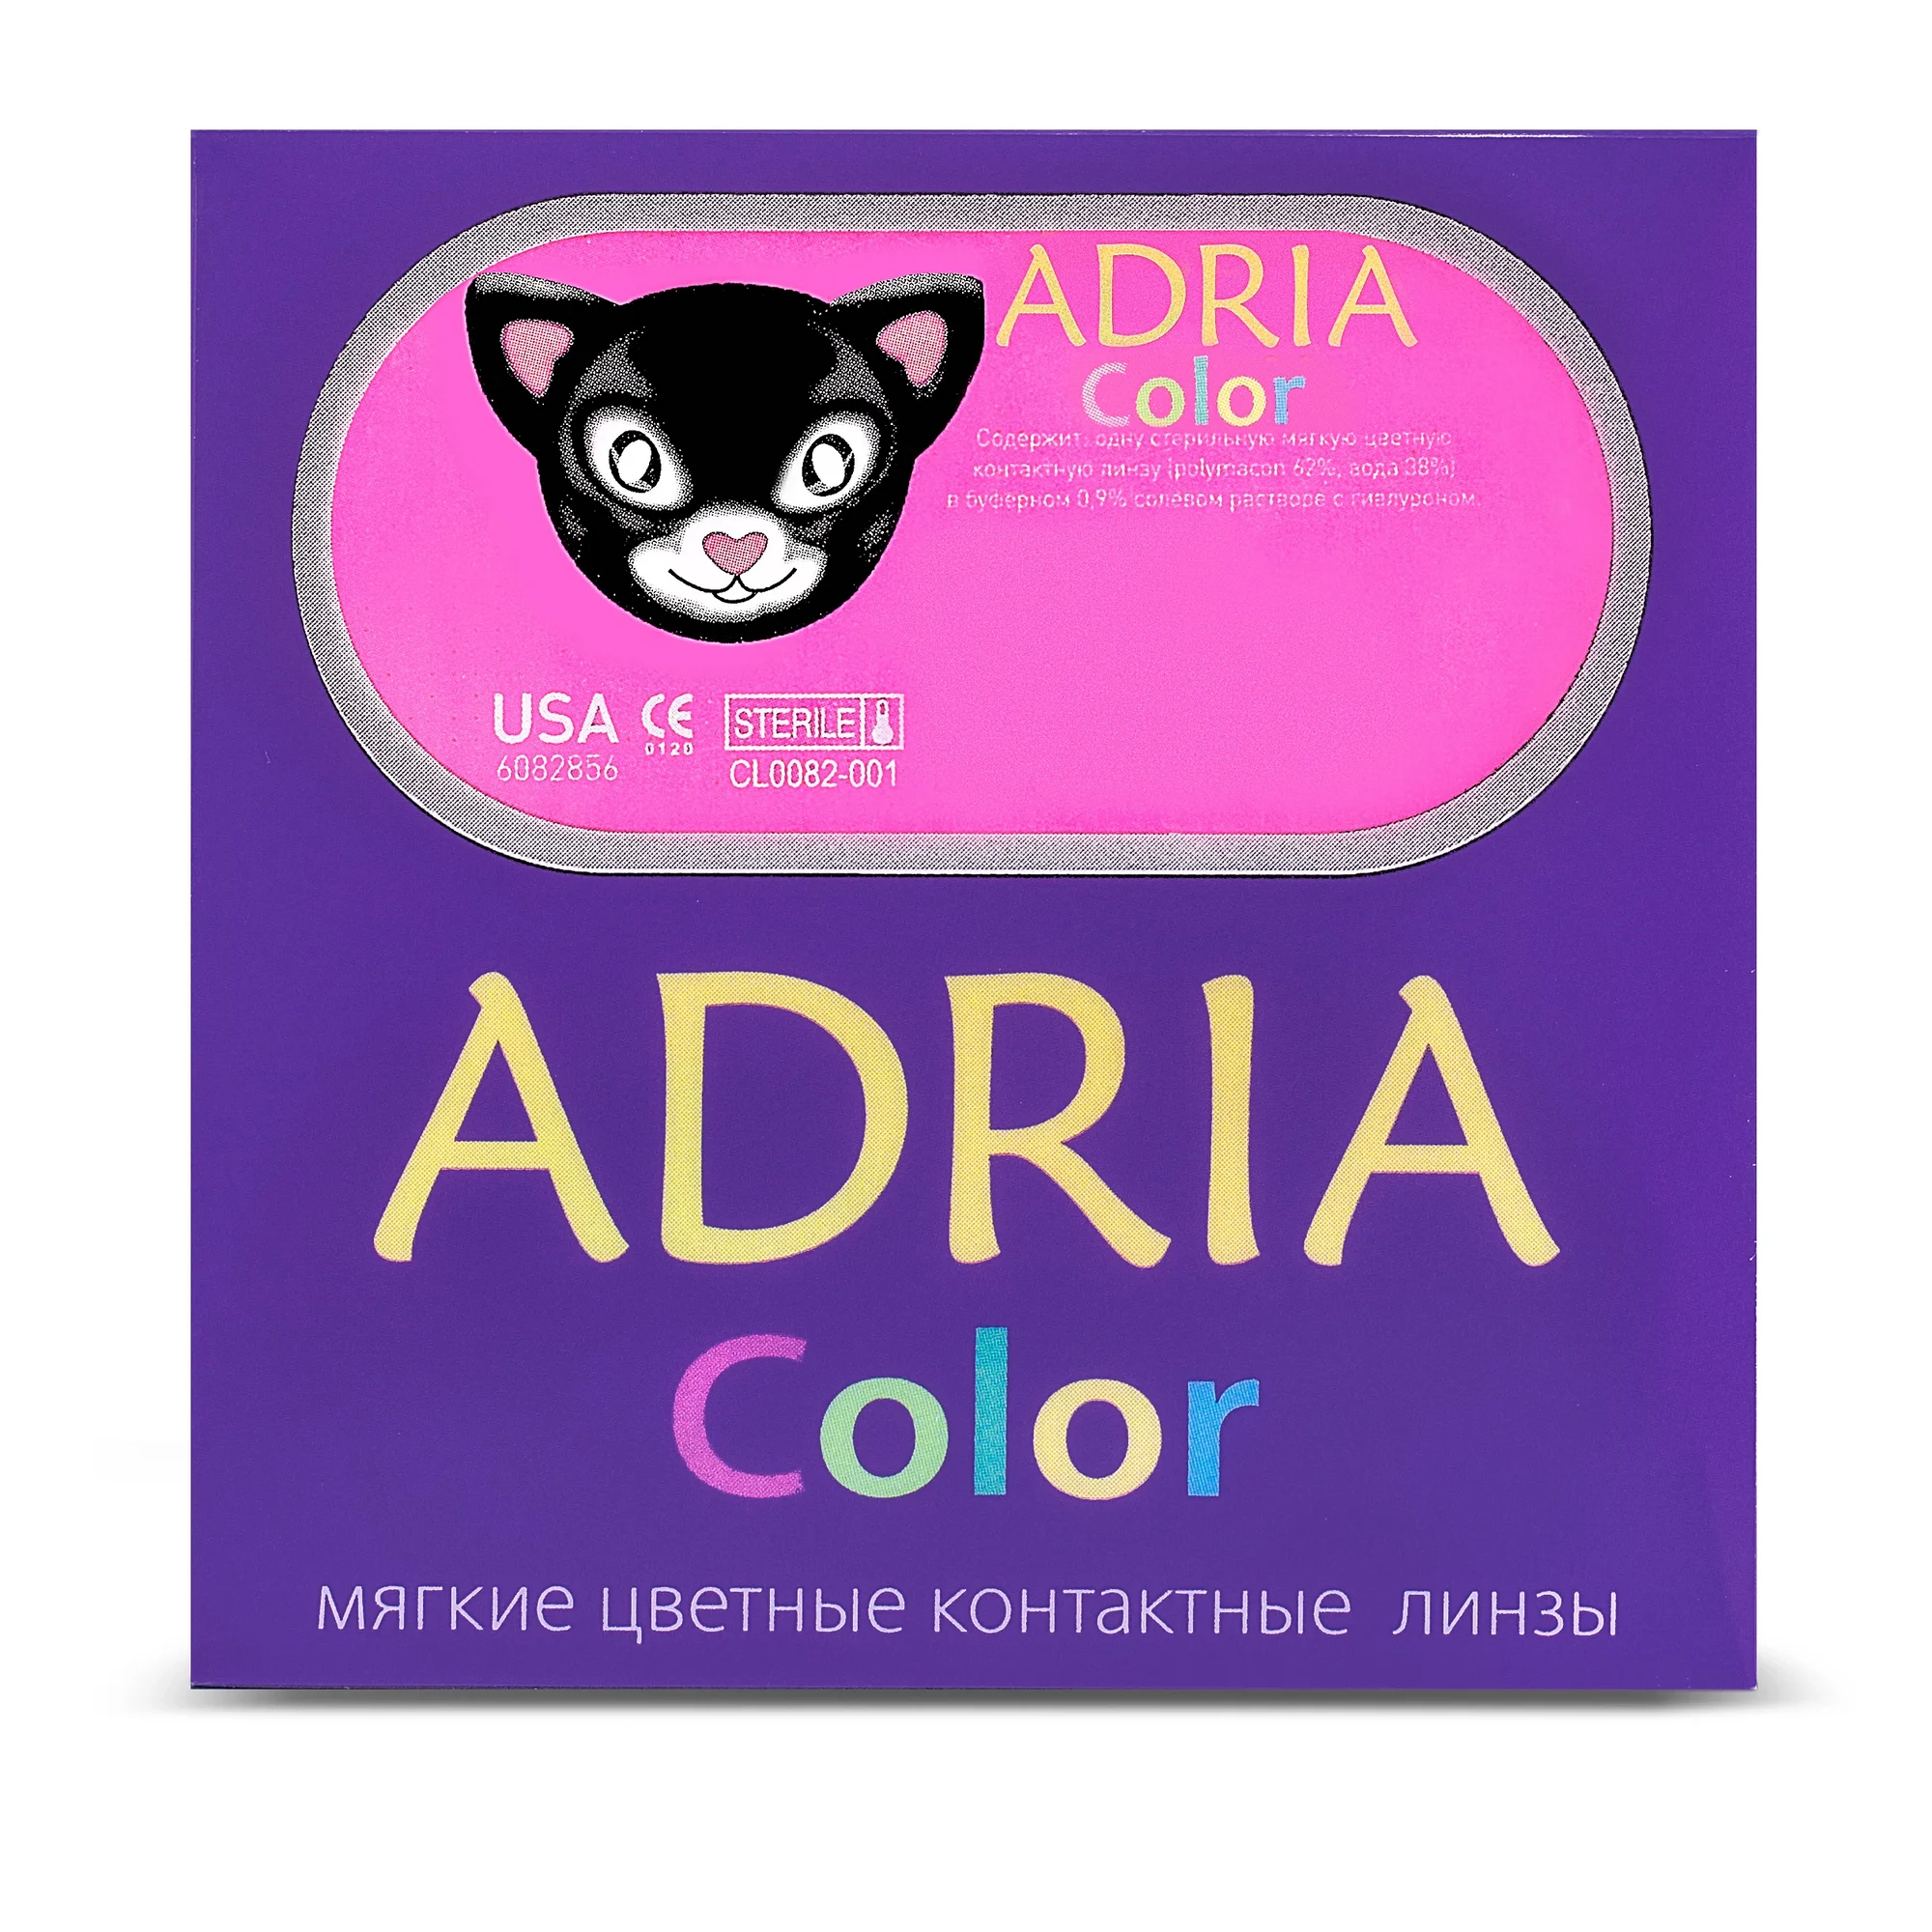 COLOR BOX ADRIA Color 3 Tone Pure Hazel (насыщенный орех)